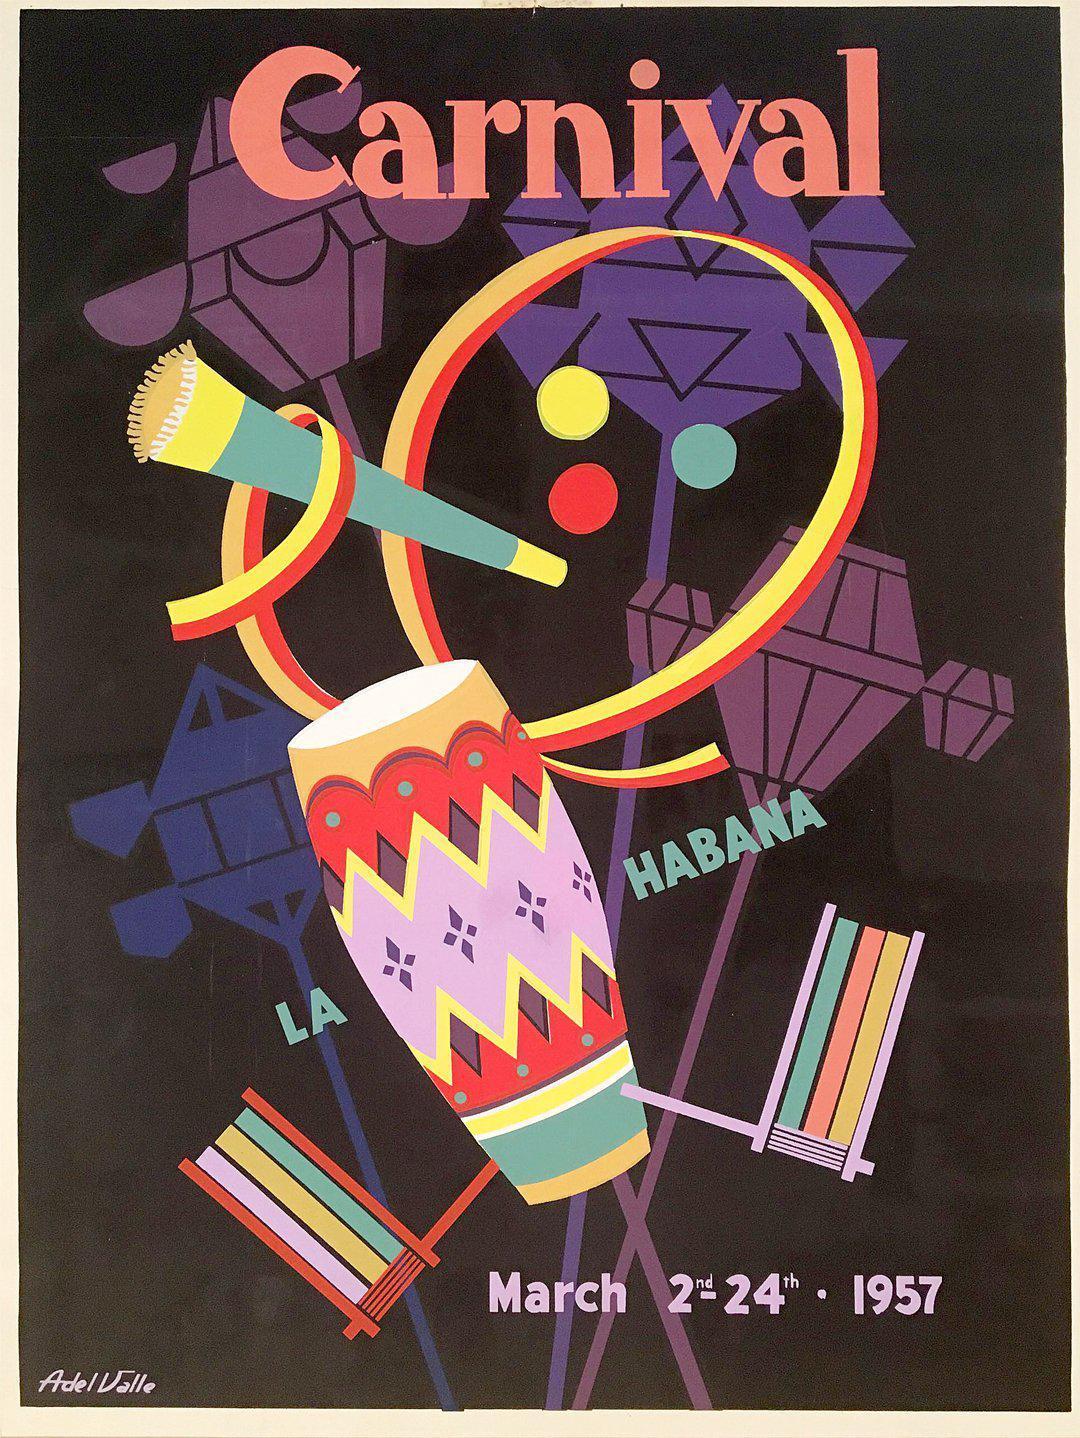 Original Vintage Cuban Poster Carnaval La Habana 1957 by Adel Valle